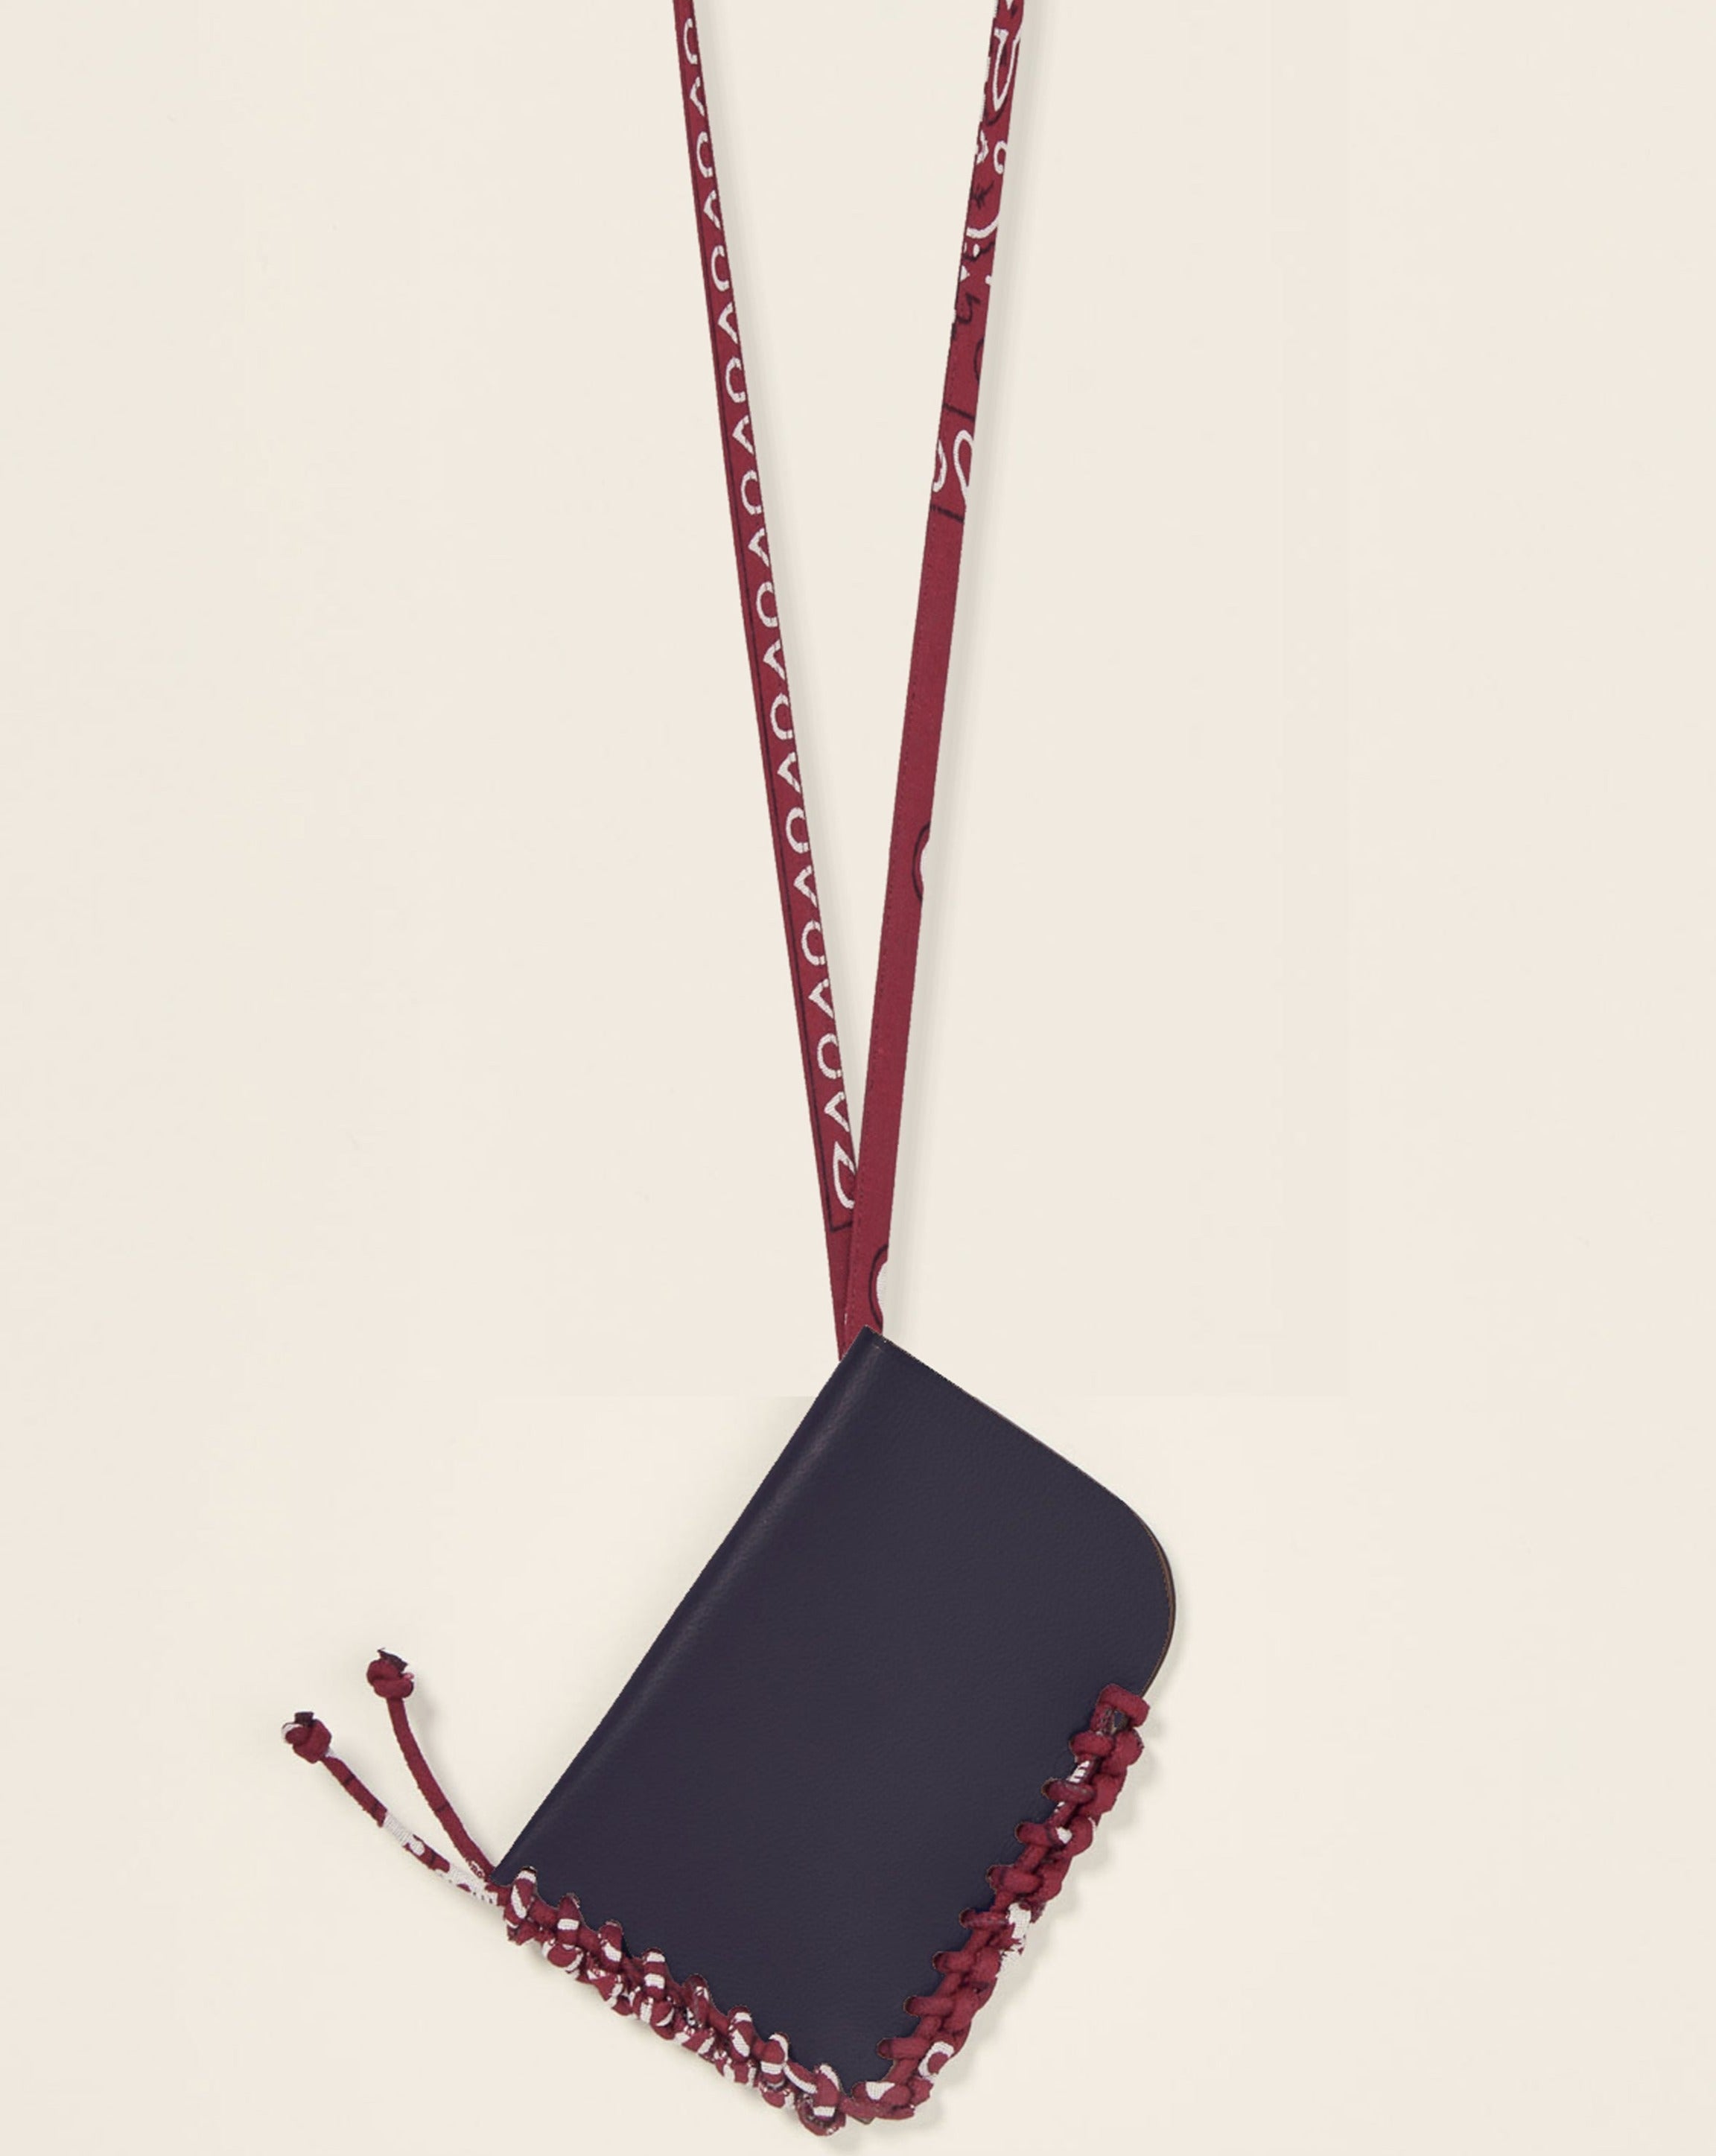 KIBO - Card holder - Navy leather & bandana burgundy